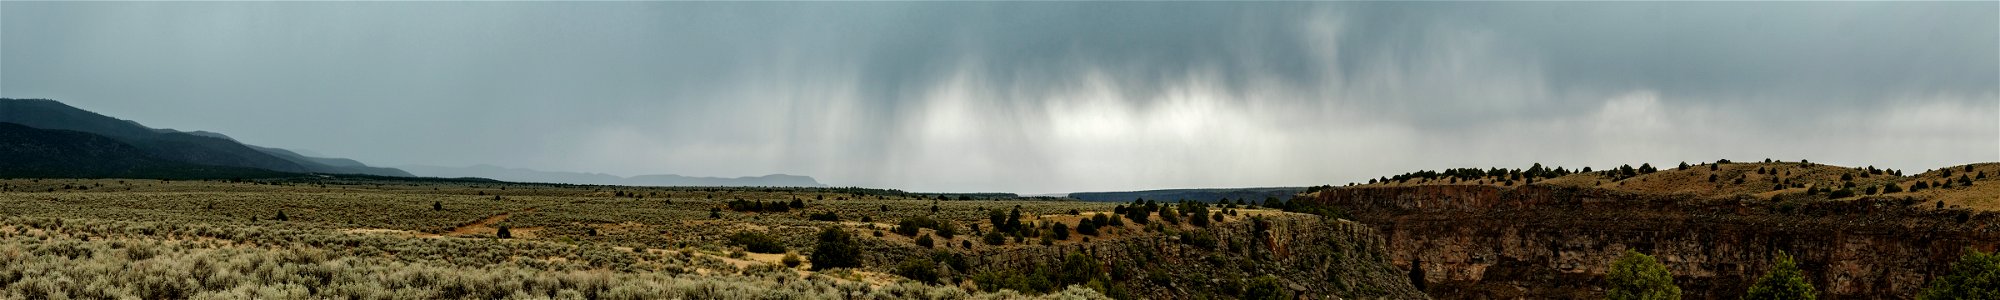 Taos, New Mexico photo